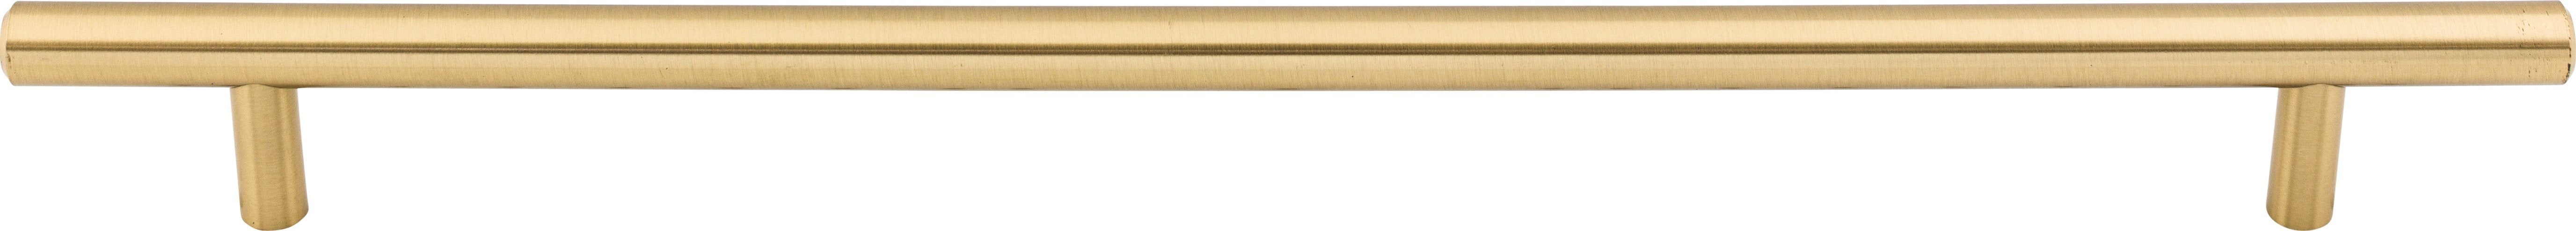 Top Knobs M2424 11-3/8in (289mm) Hopewell Bar Pull Honey Bronze - KnobDepot